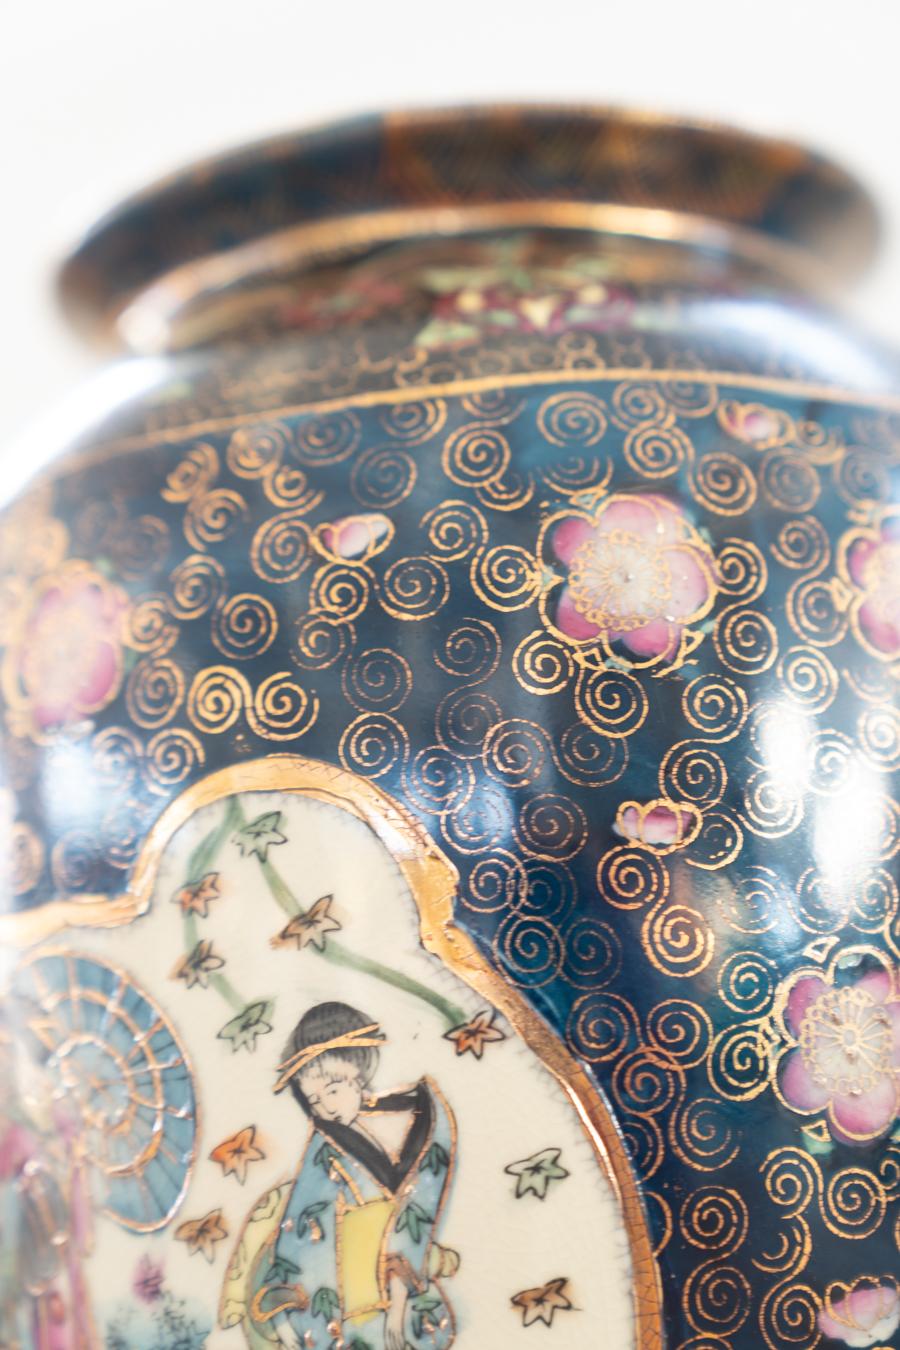 Japanese antique porcelain porcelain vases Meiji period 19th century For Sale 14